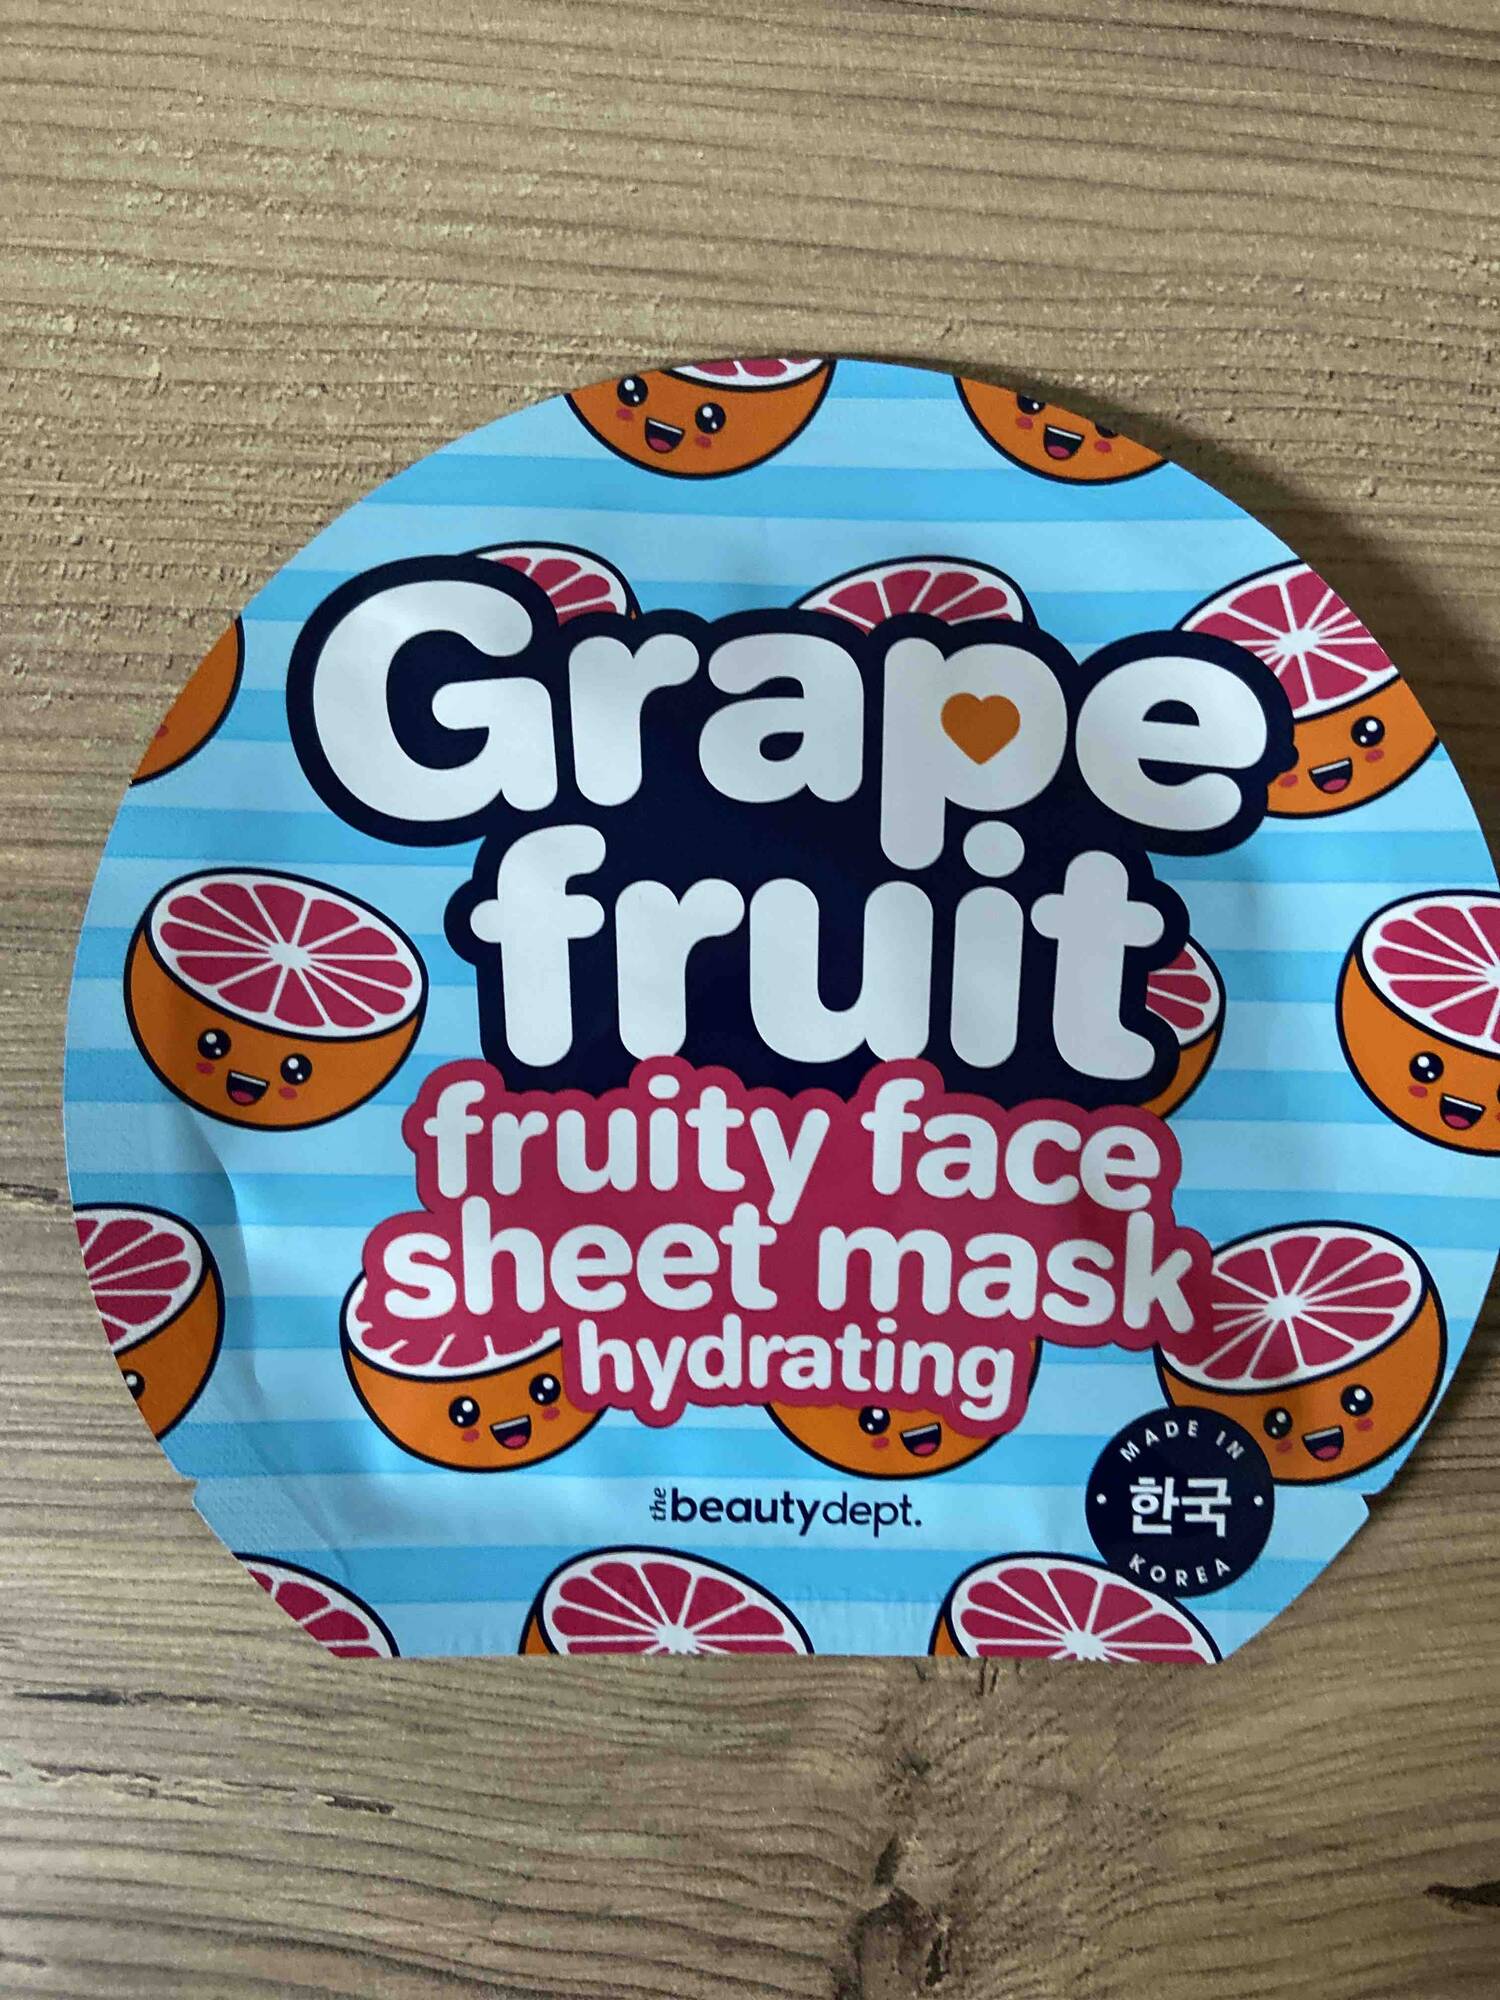 THE BEAUTY DEPT - Grape fruit - Fruity face sheet mask hydrating